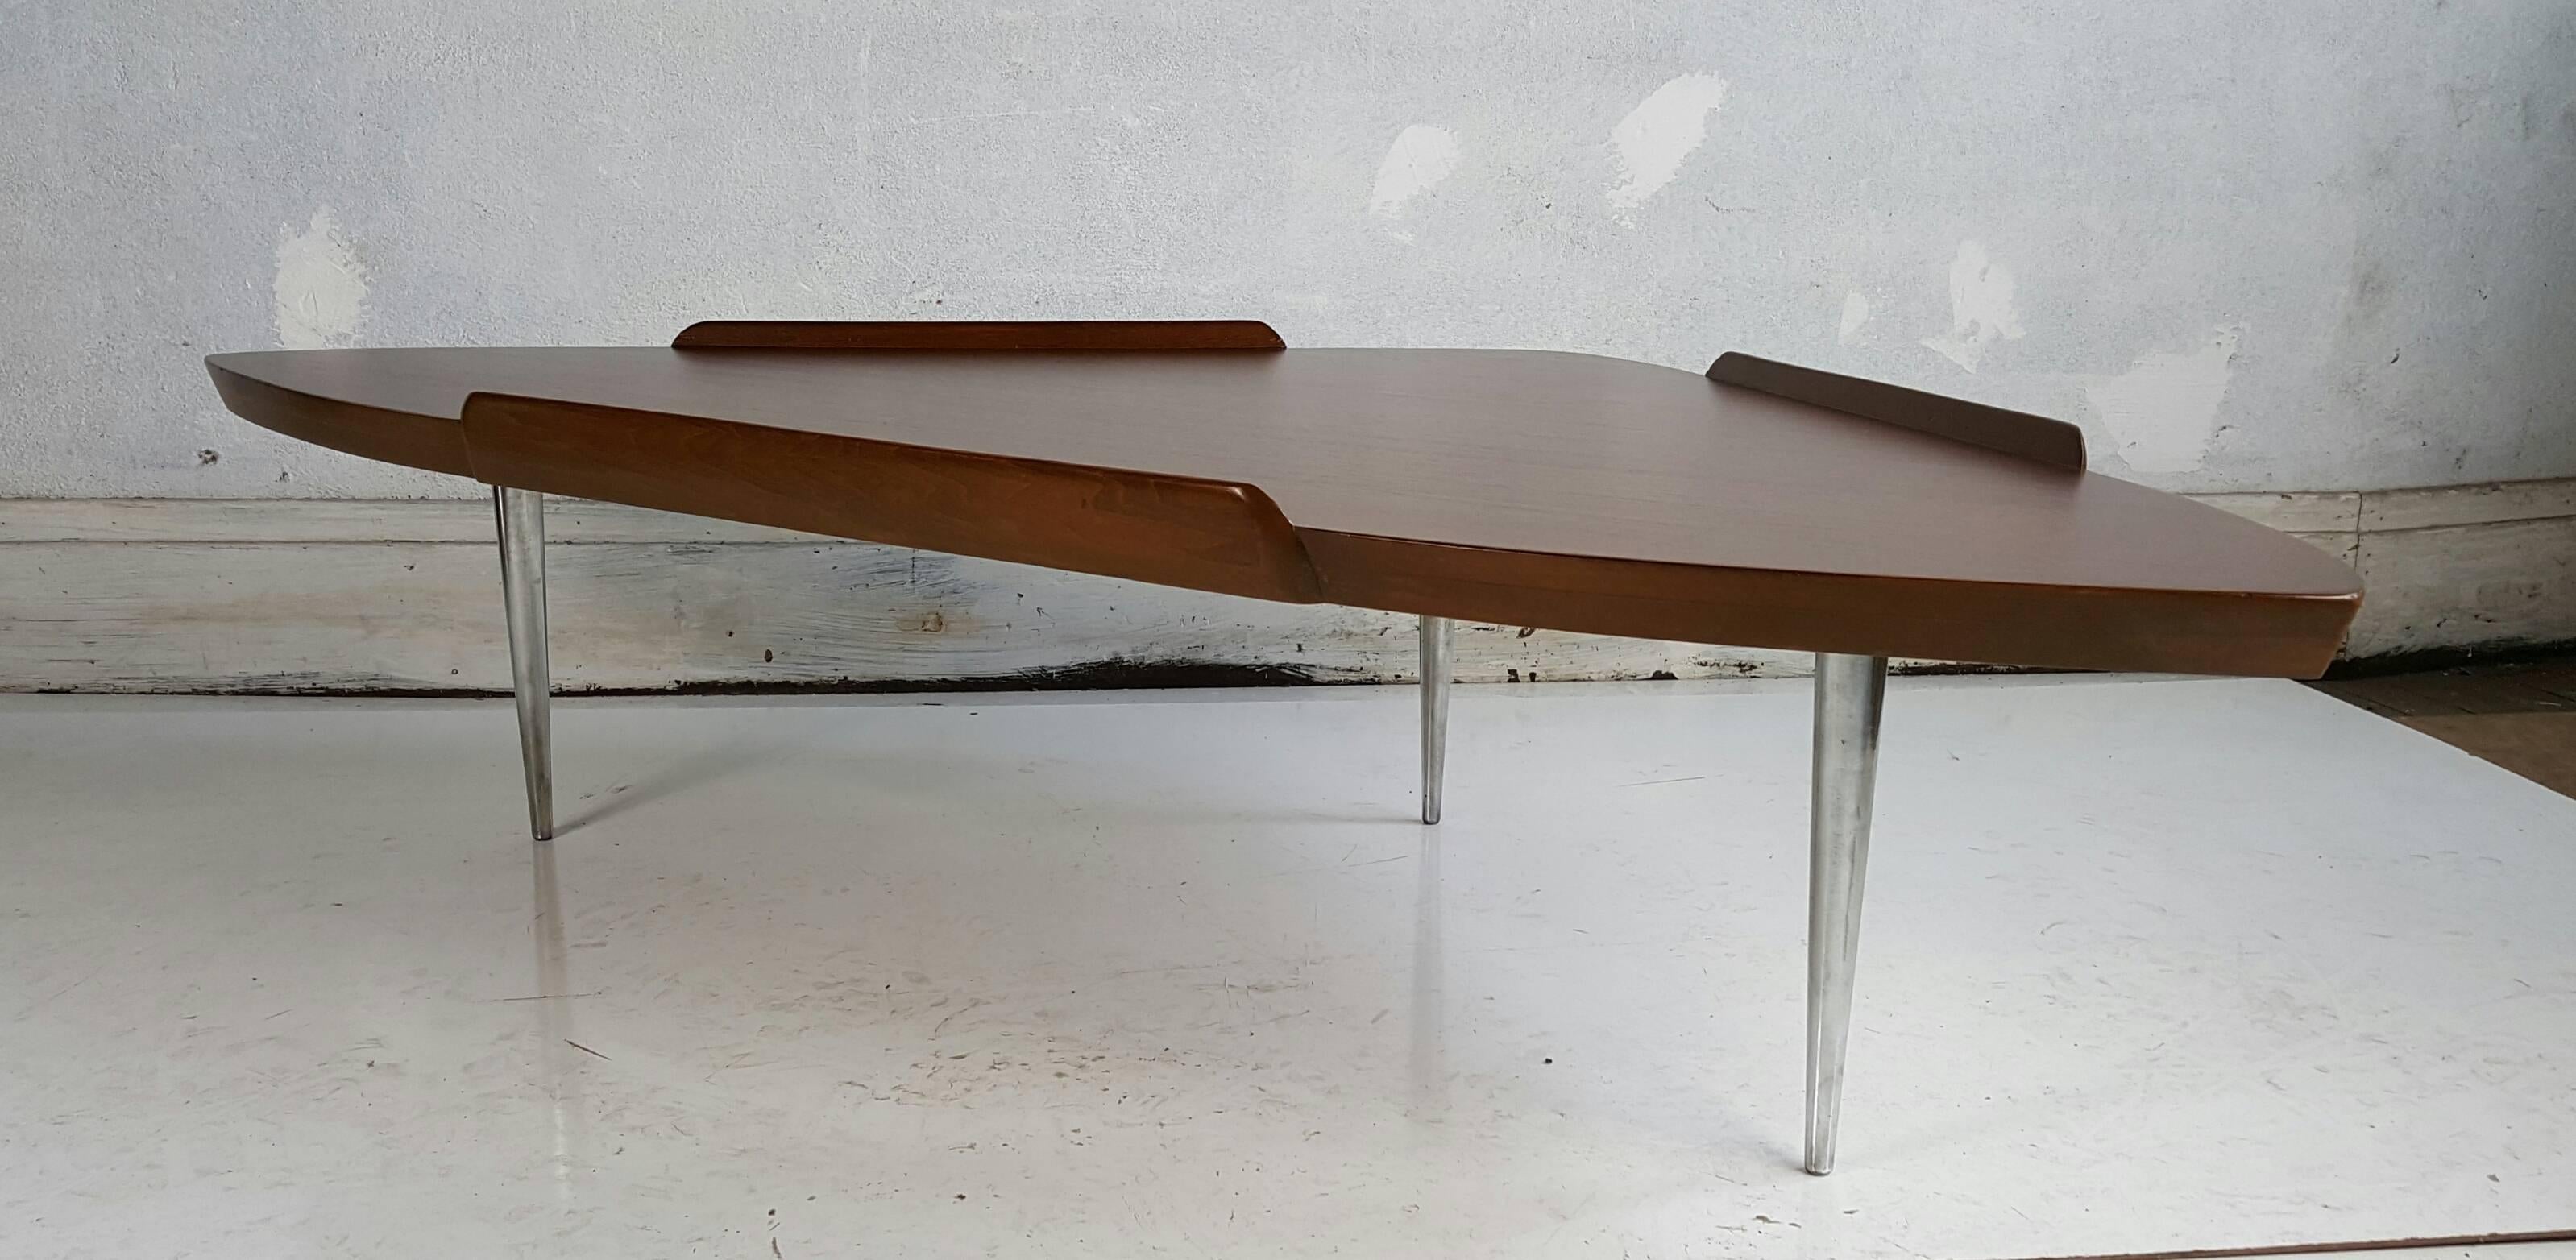 Unusual modernist cocktail table, guitar pick shape, versatile form for optimal convenient use, manner of Finn Juhl.